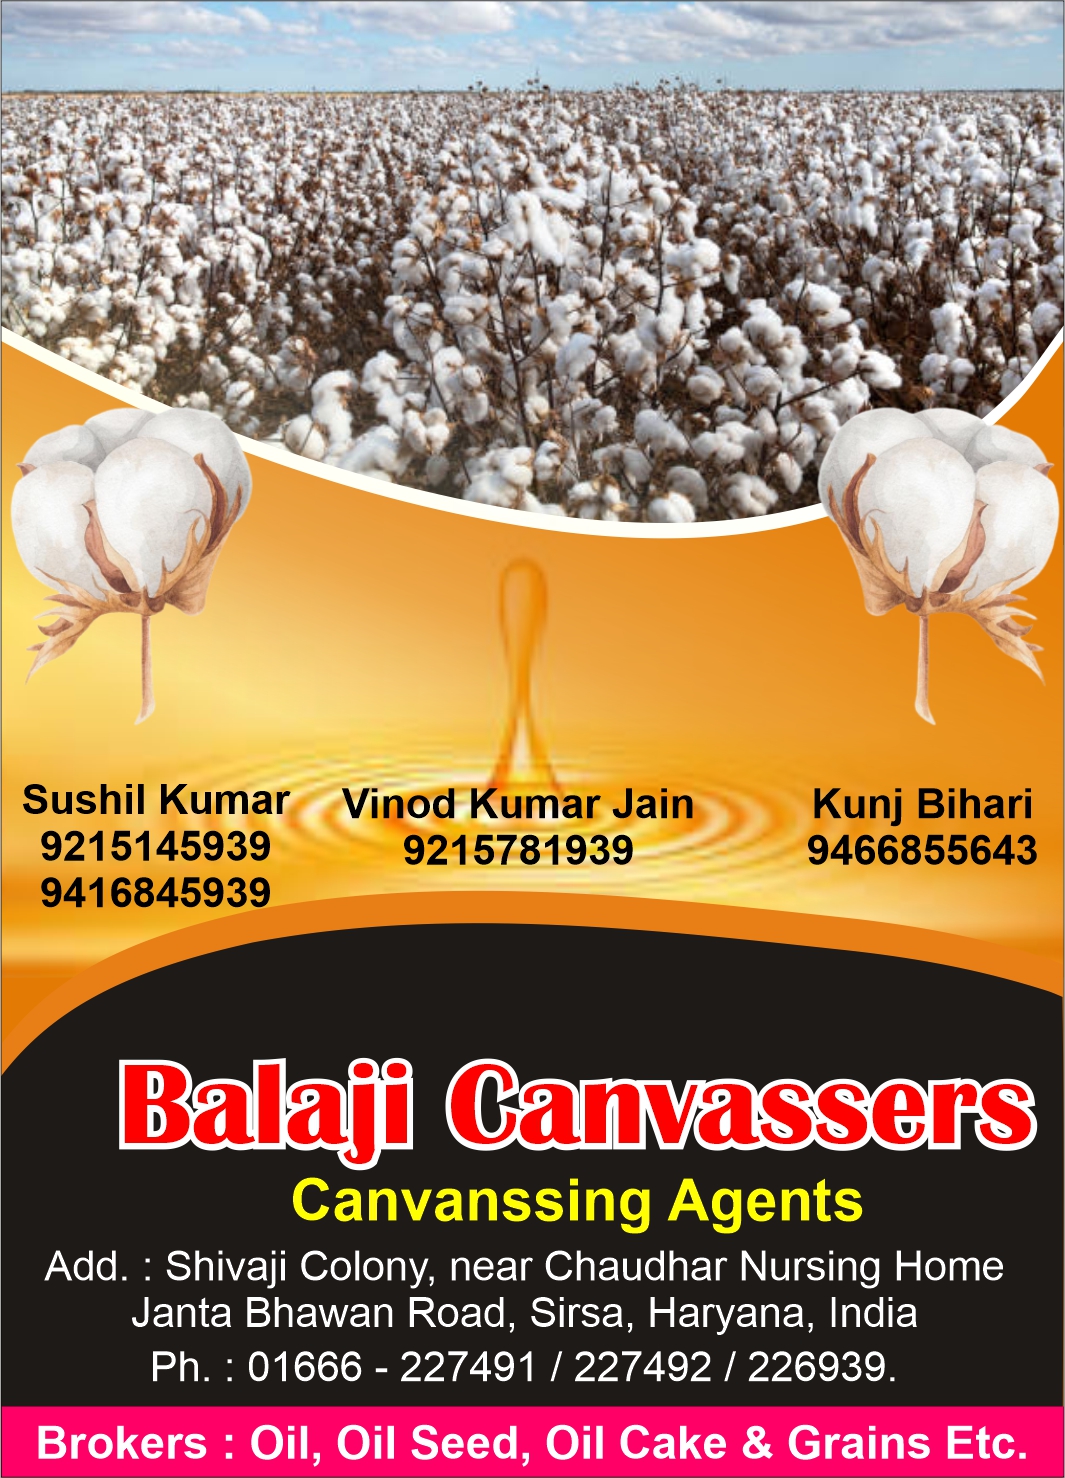 Balaji Canvassers